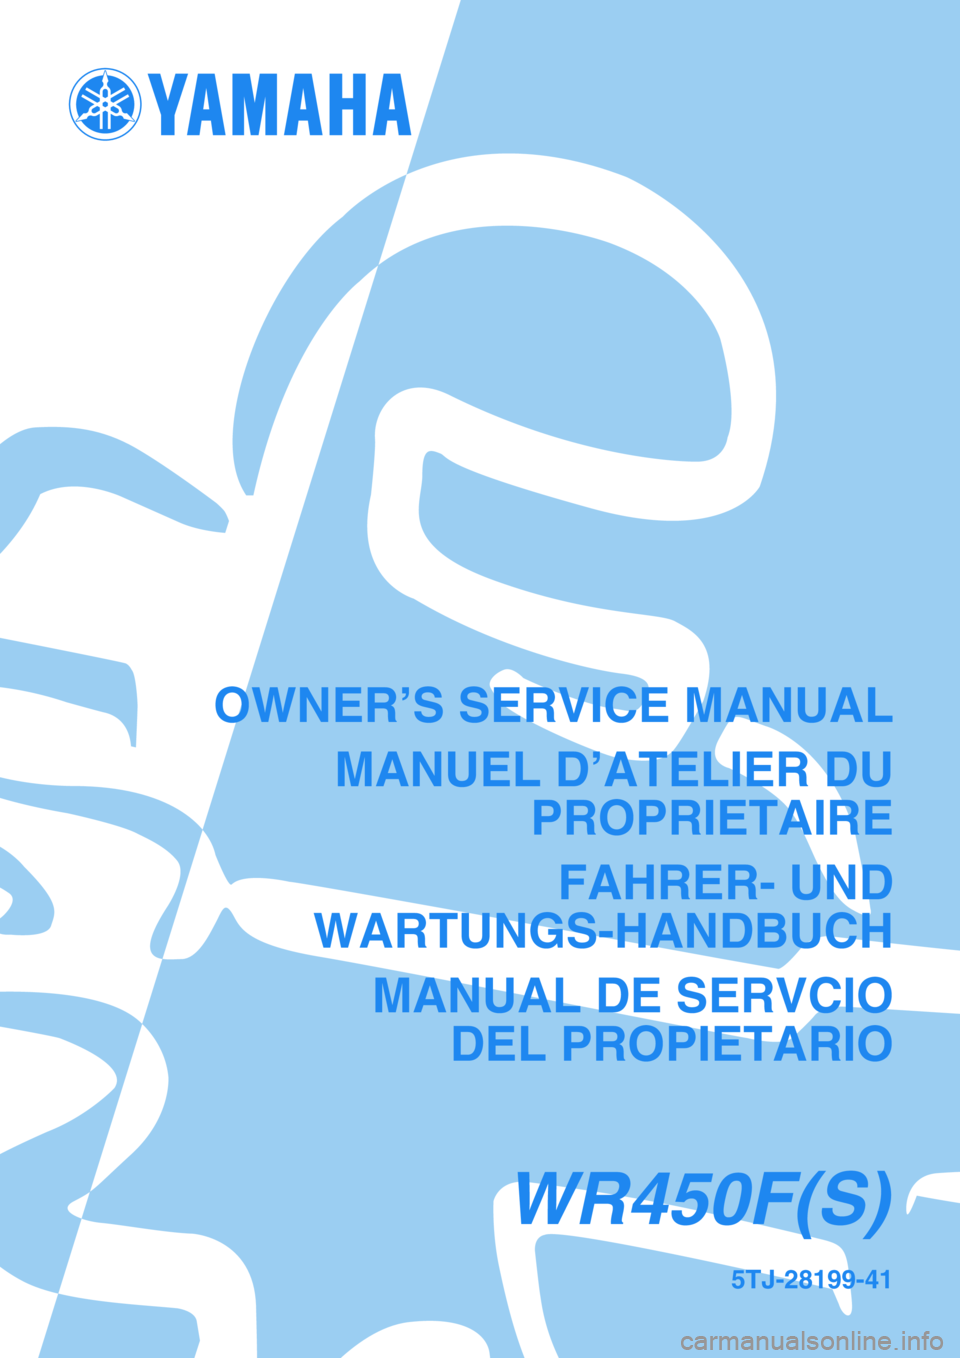 YAMAHA WR 450F 2004  Manuale de Empleo (in Spanish) 5TJ-28199-41
WR450F(S)
OWNER’S SERVICE MANUAL
MANUEL D’ATELIER DU
PROPRIETAIRE
FAHRER- UND
WARTUNGS-HANDBUCH
MANUAL DE SERVCIO
DEL PROPIETARIO 